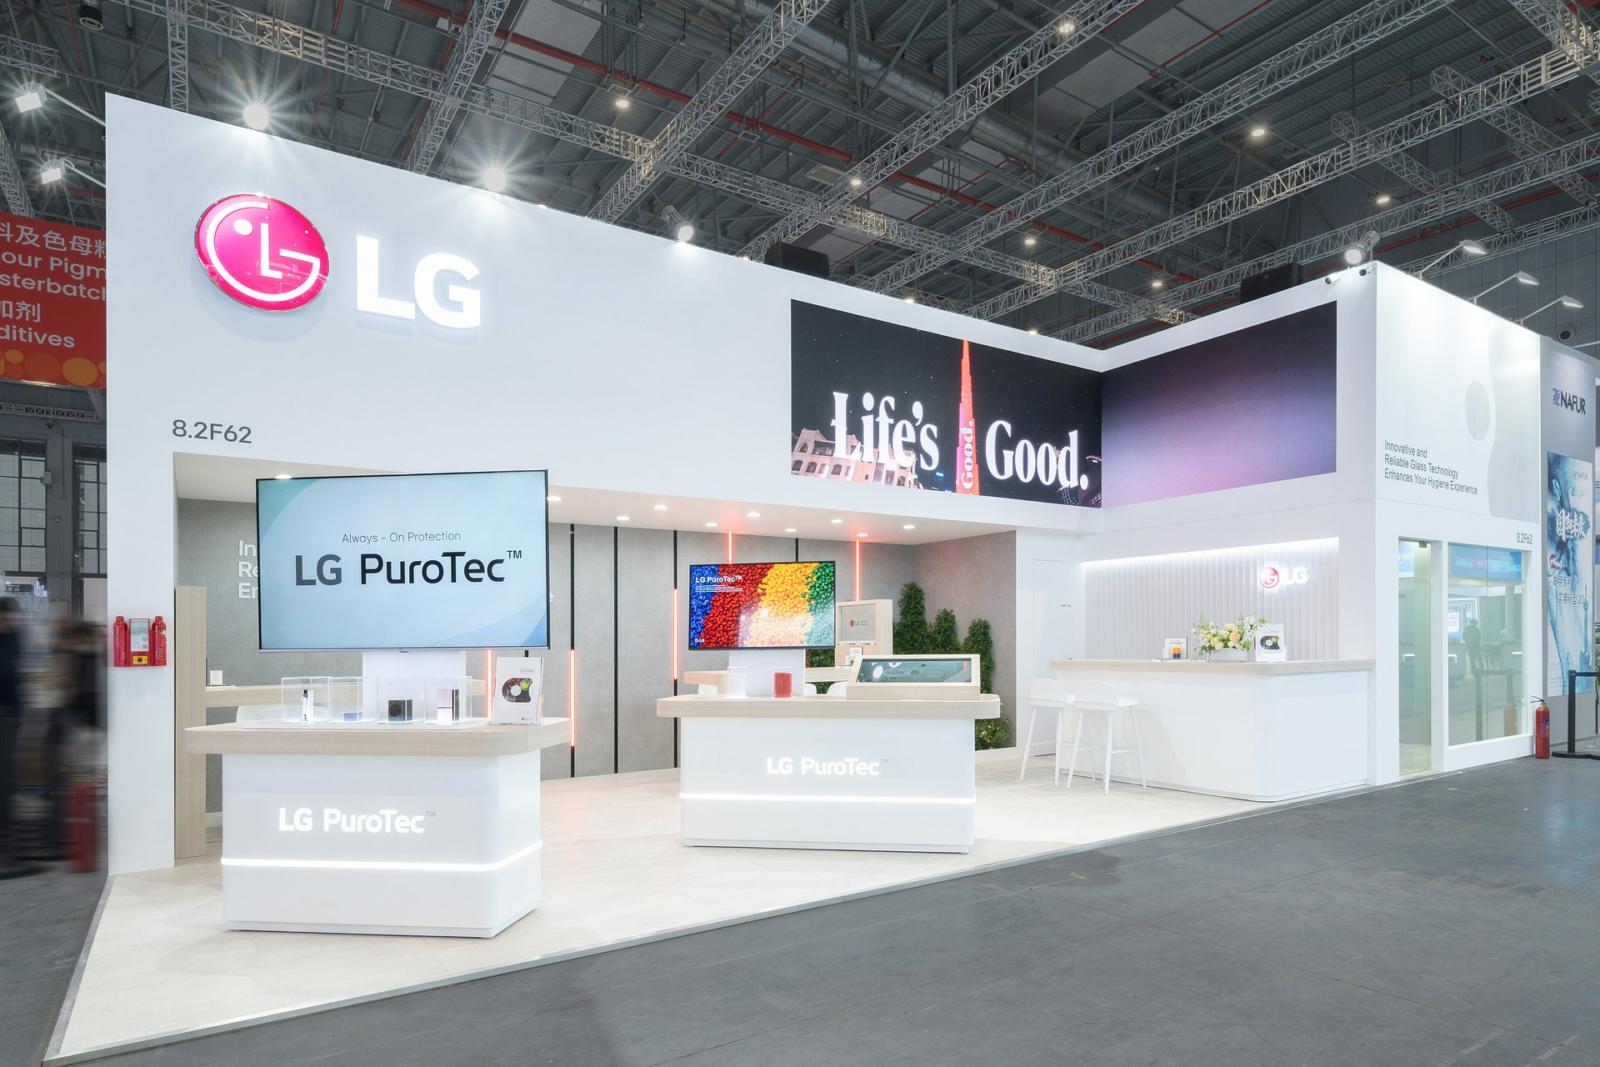 LG wprowadza na rynek antybakteryjny proszek szklany